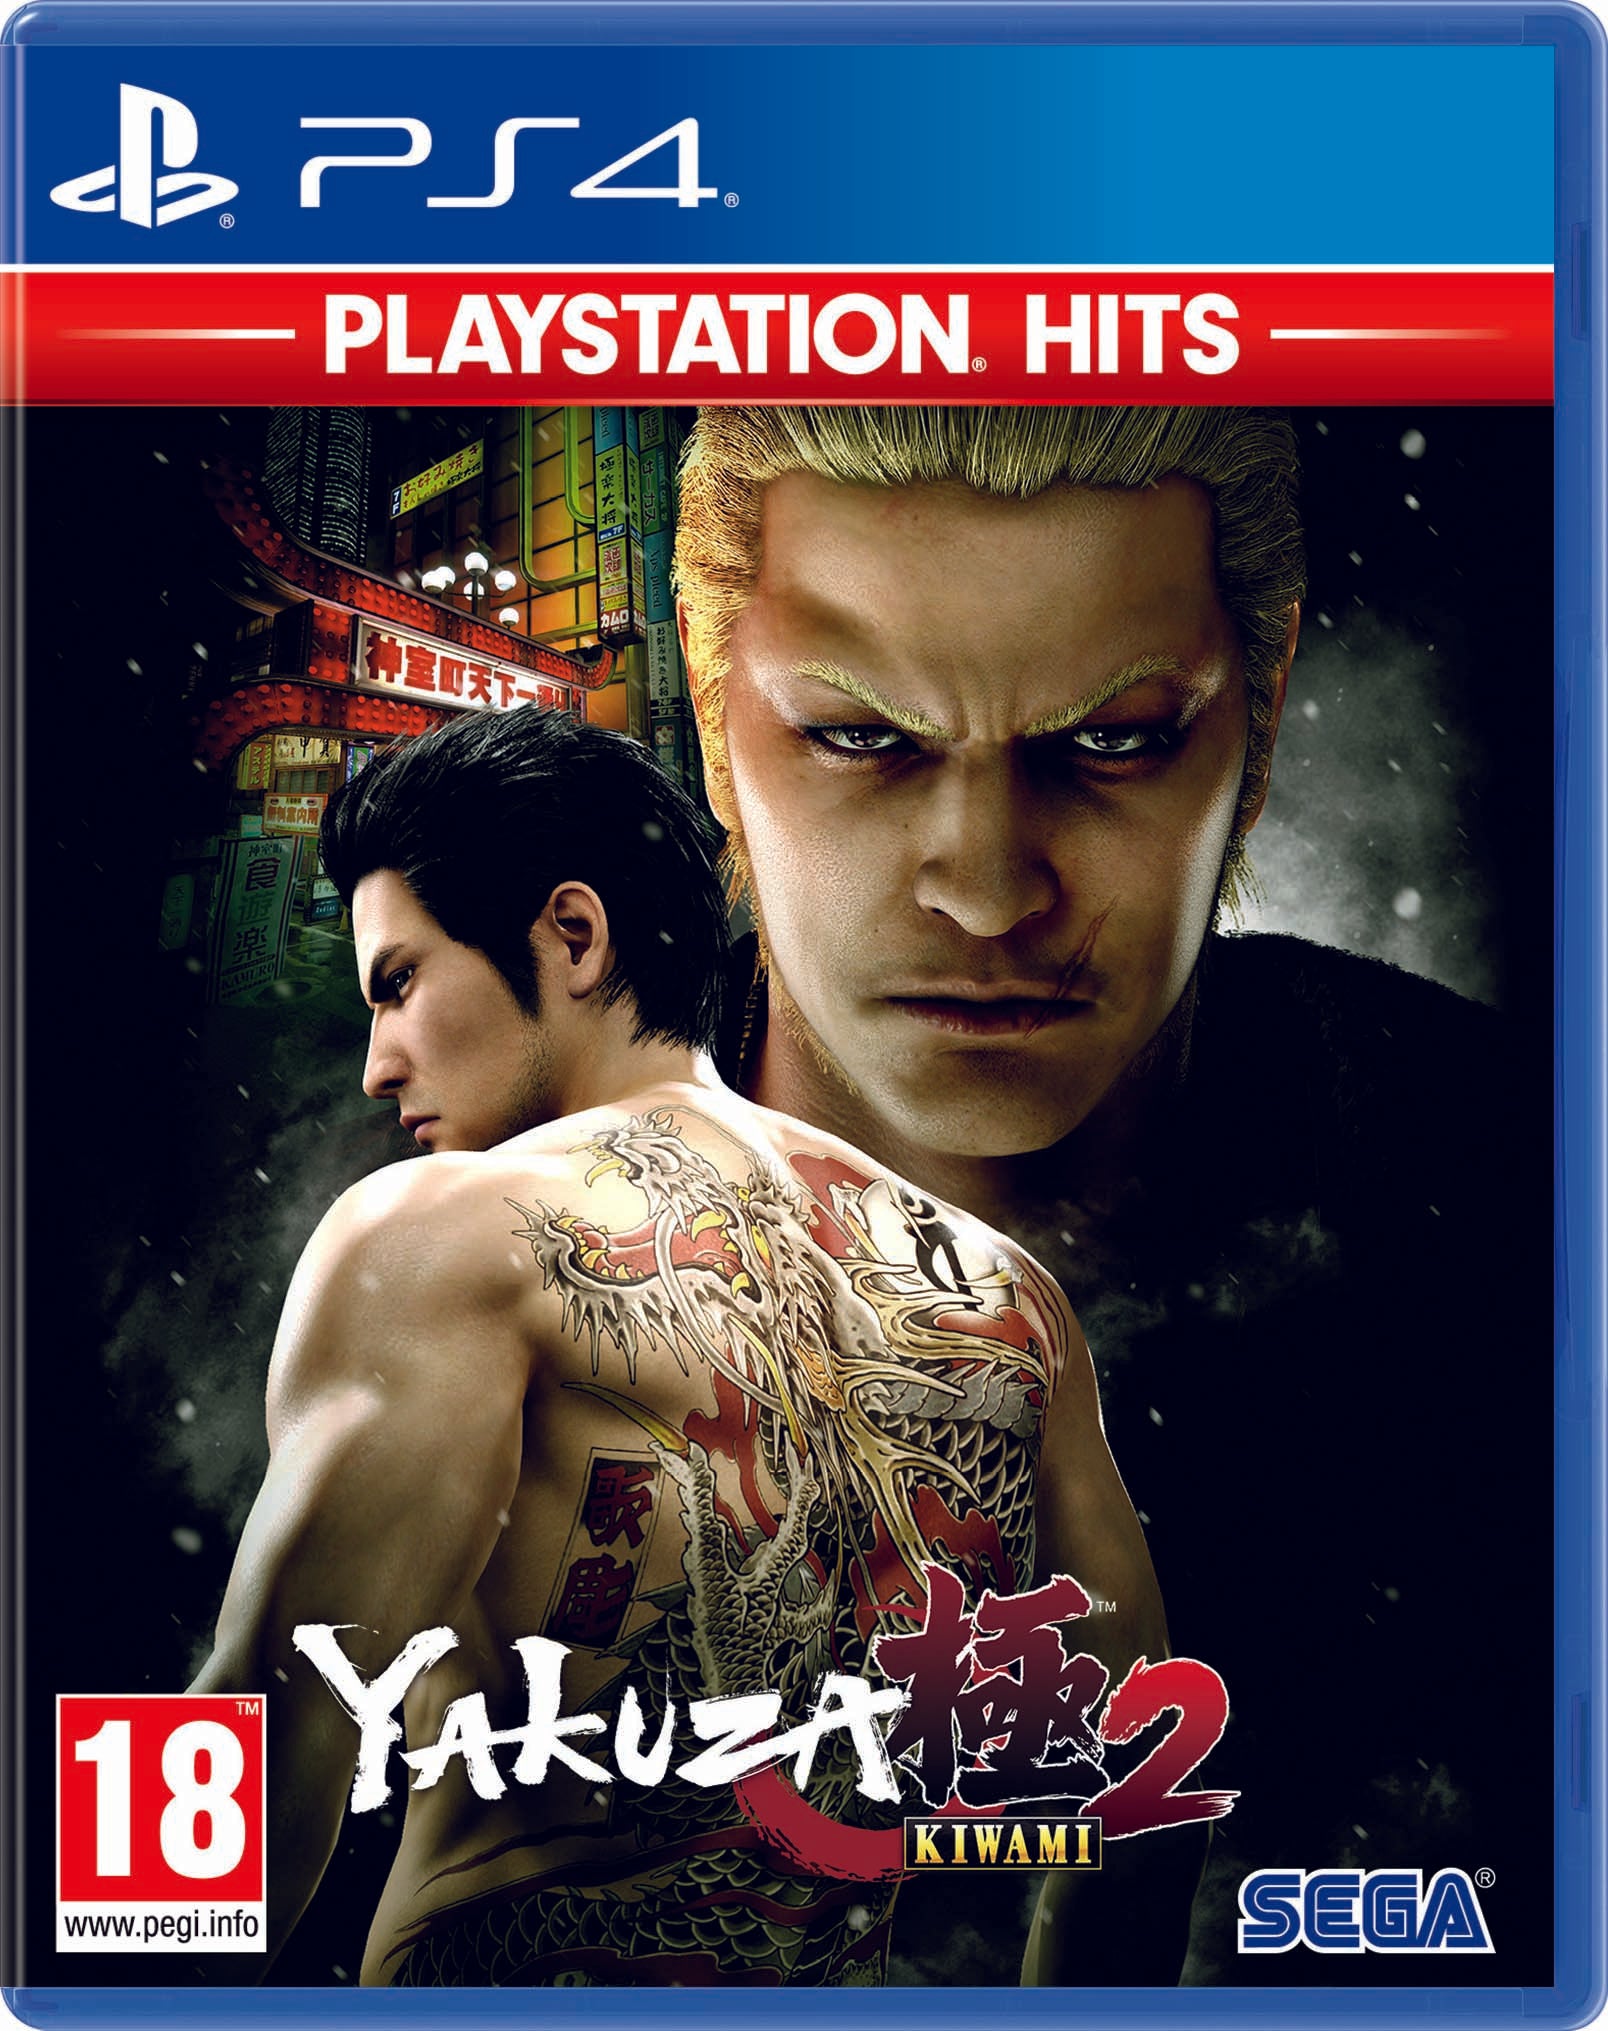 Yakuza Kiwami 2 - PlayStation Hits